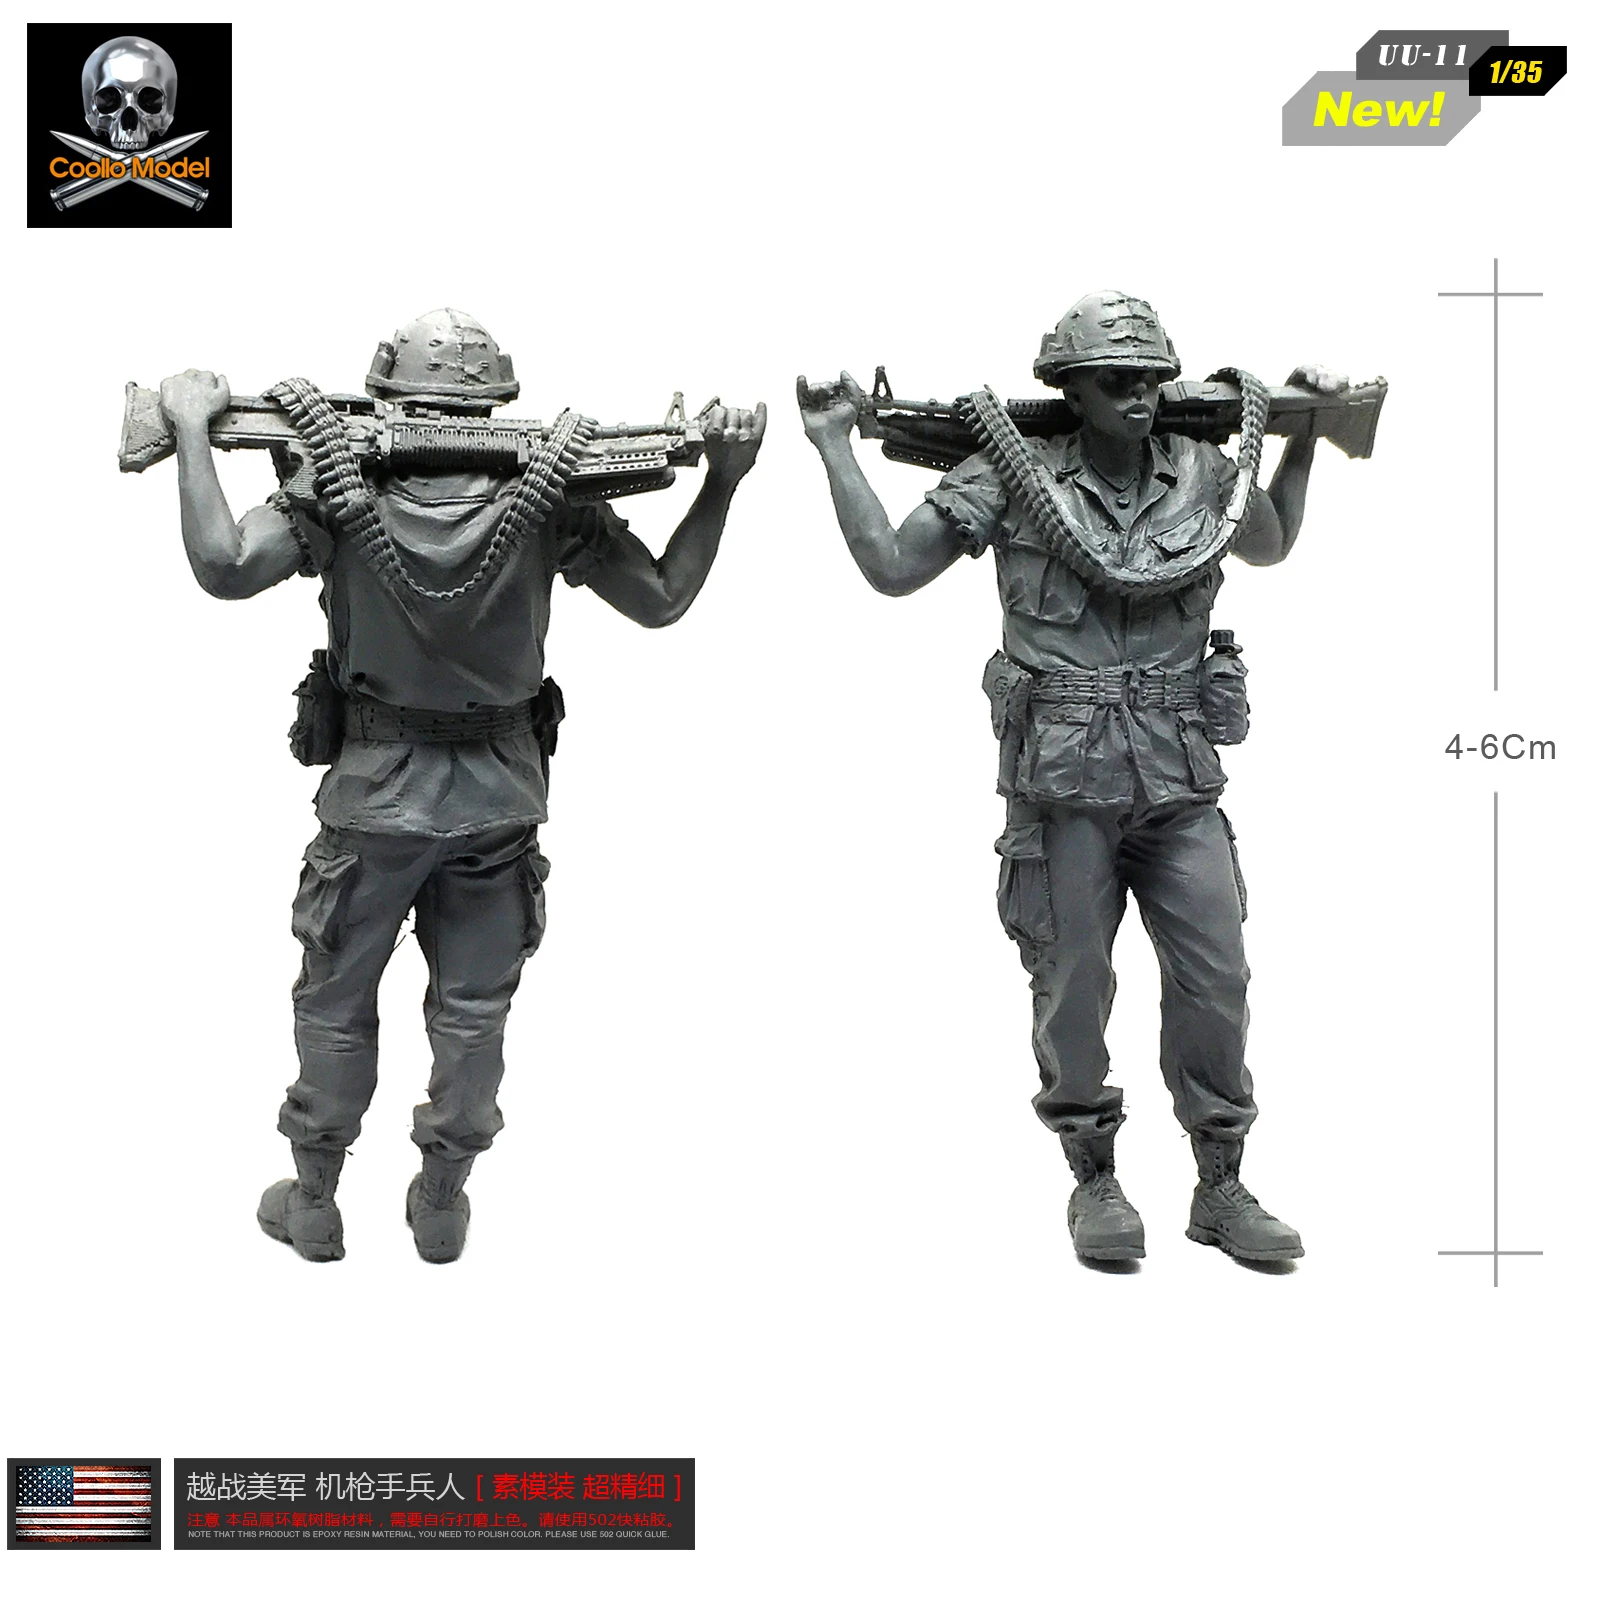 

1/35 Model Kits Vietnam War Us Marine Corps 1:35 Resin Soldier Black Machine Gunner UU-11